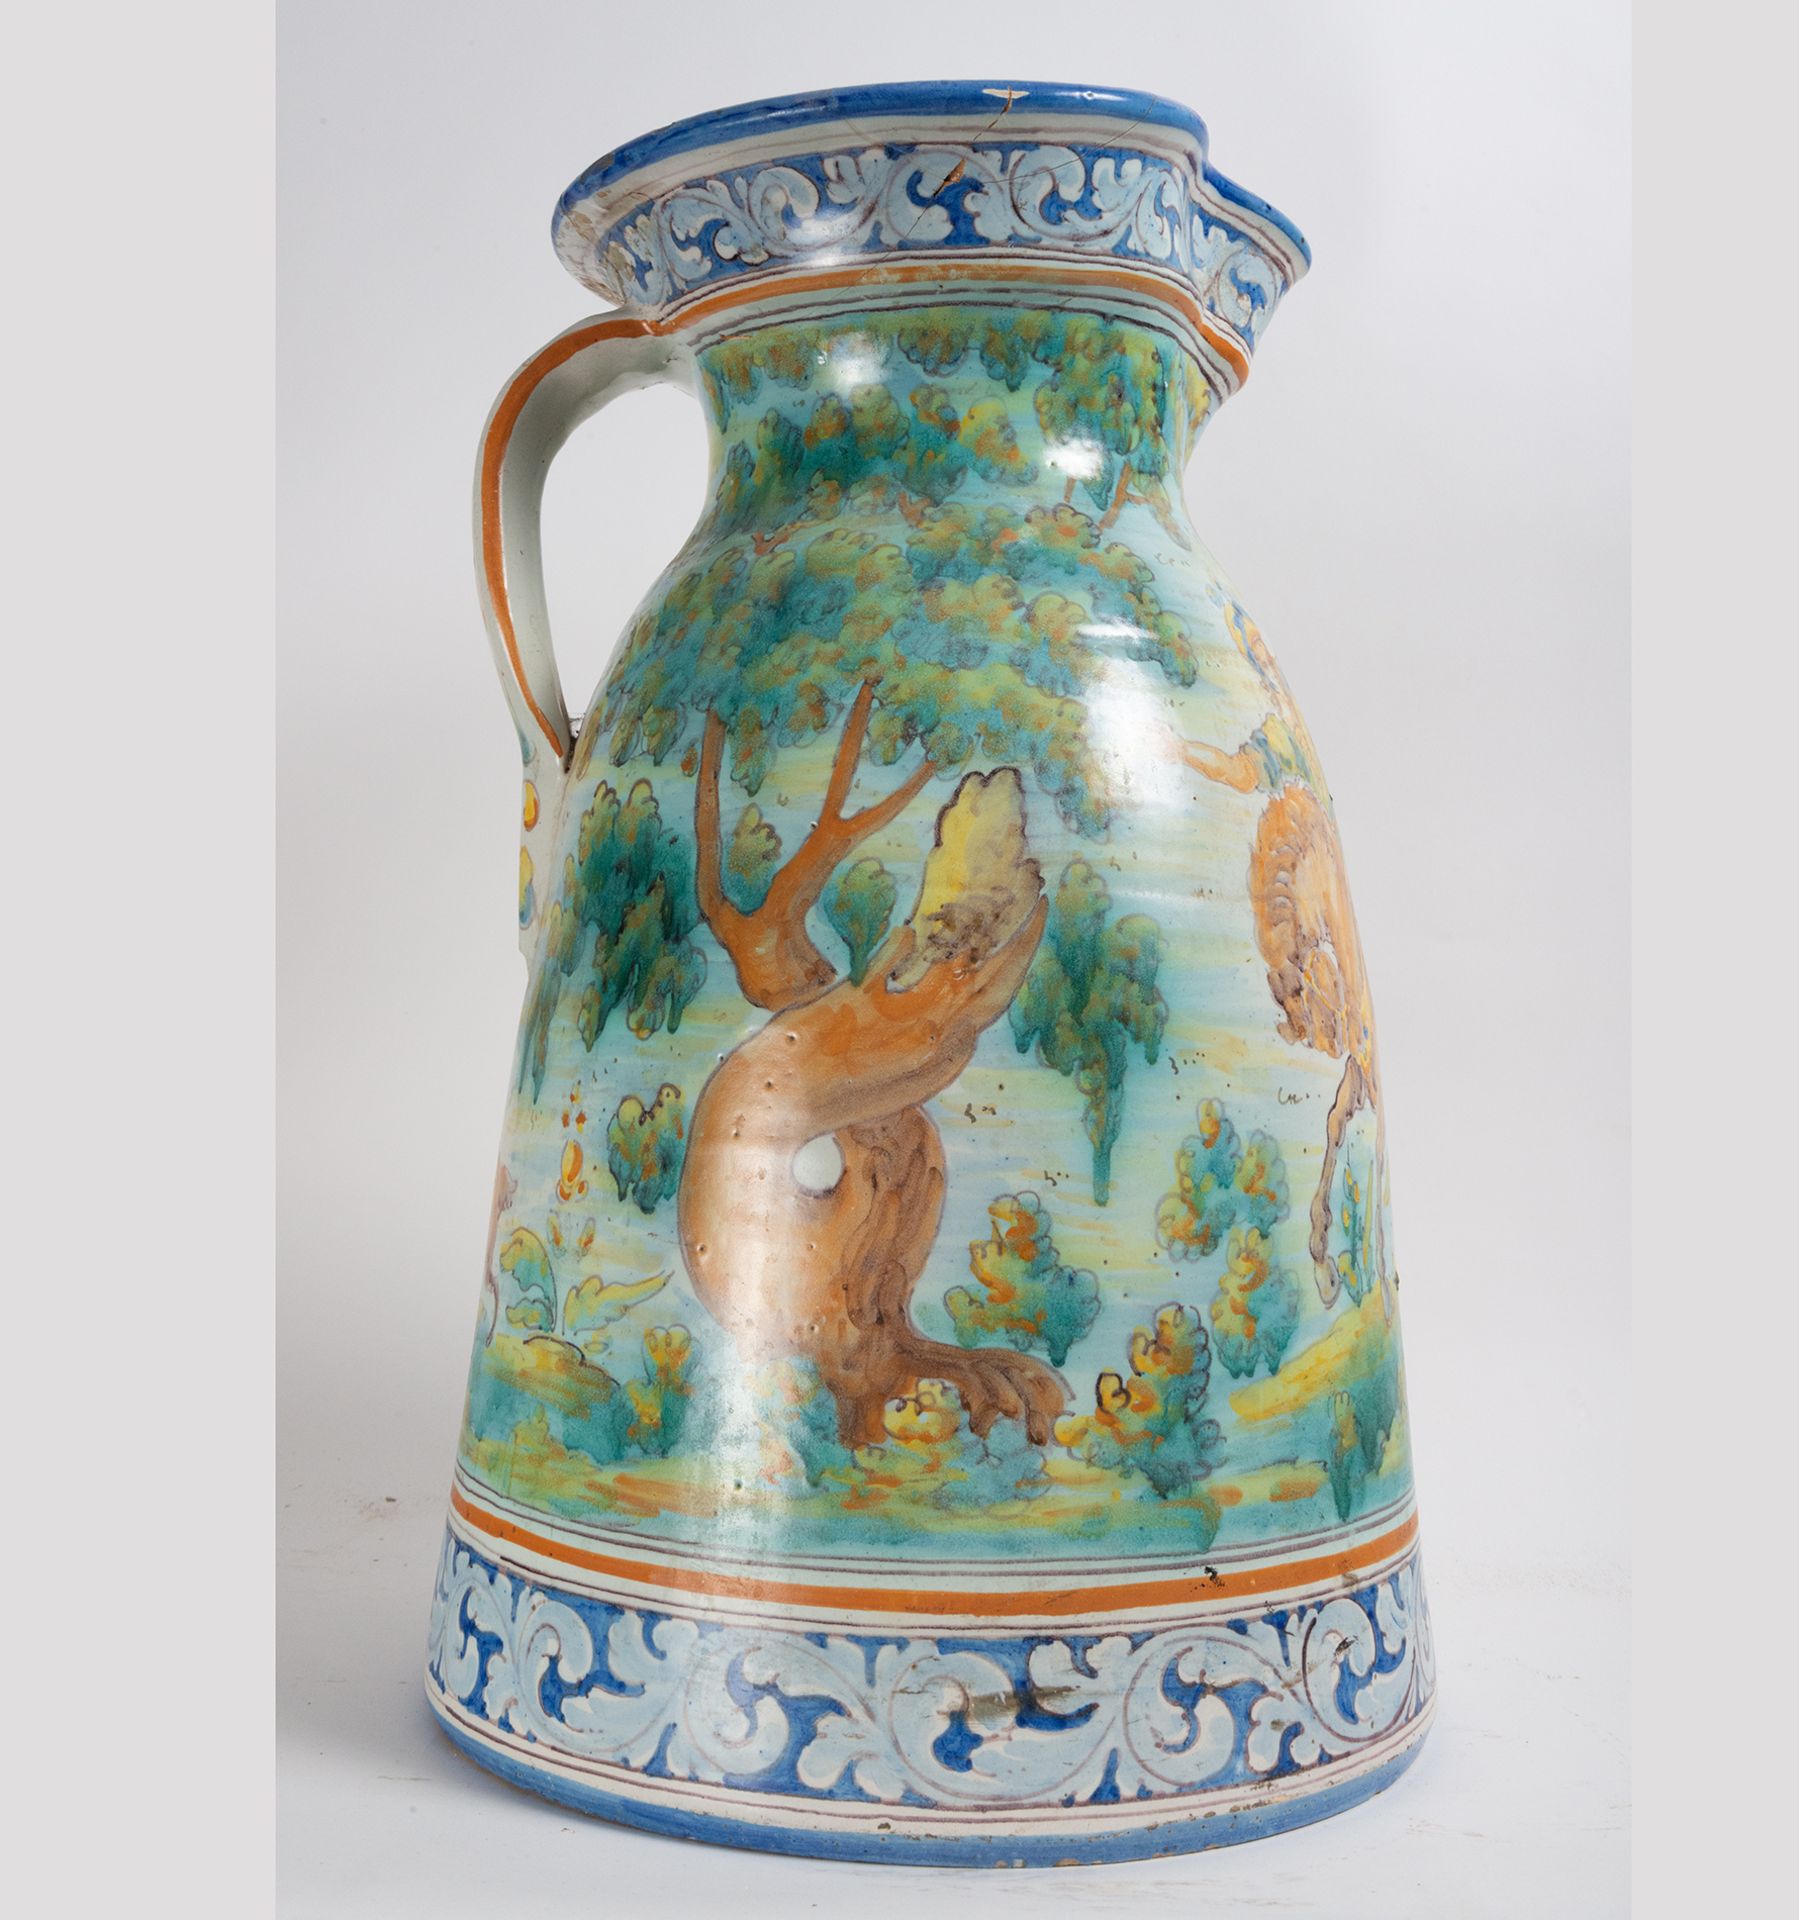 Talaverona jug hunting motifs Ruiz de Luna series, 19th - 20th century - Image 2 of 3